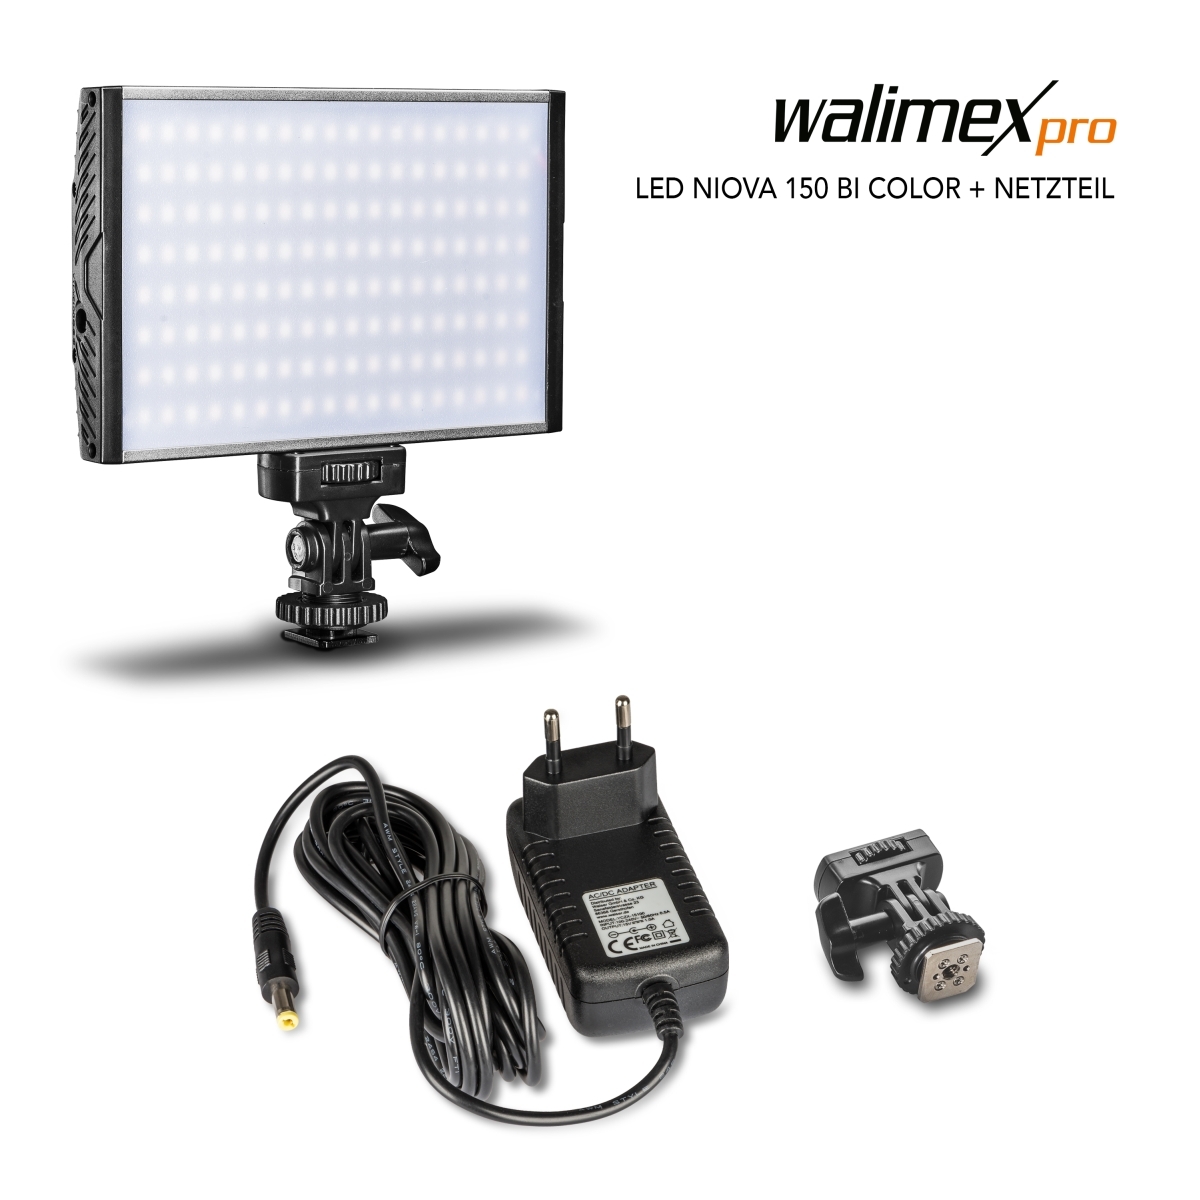 15V,1A Walimex pro Netzteil für LED Niova 150 